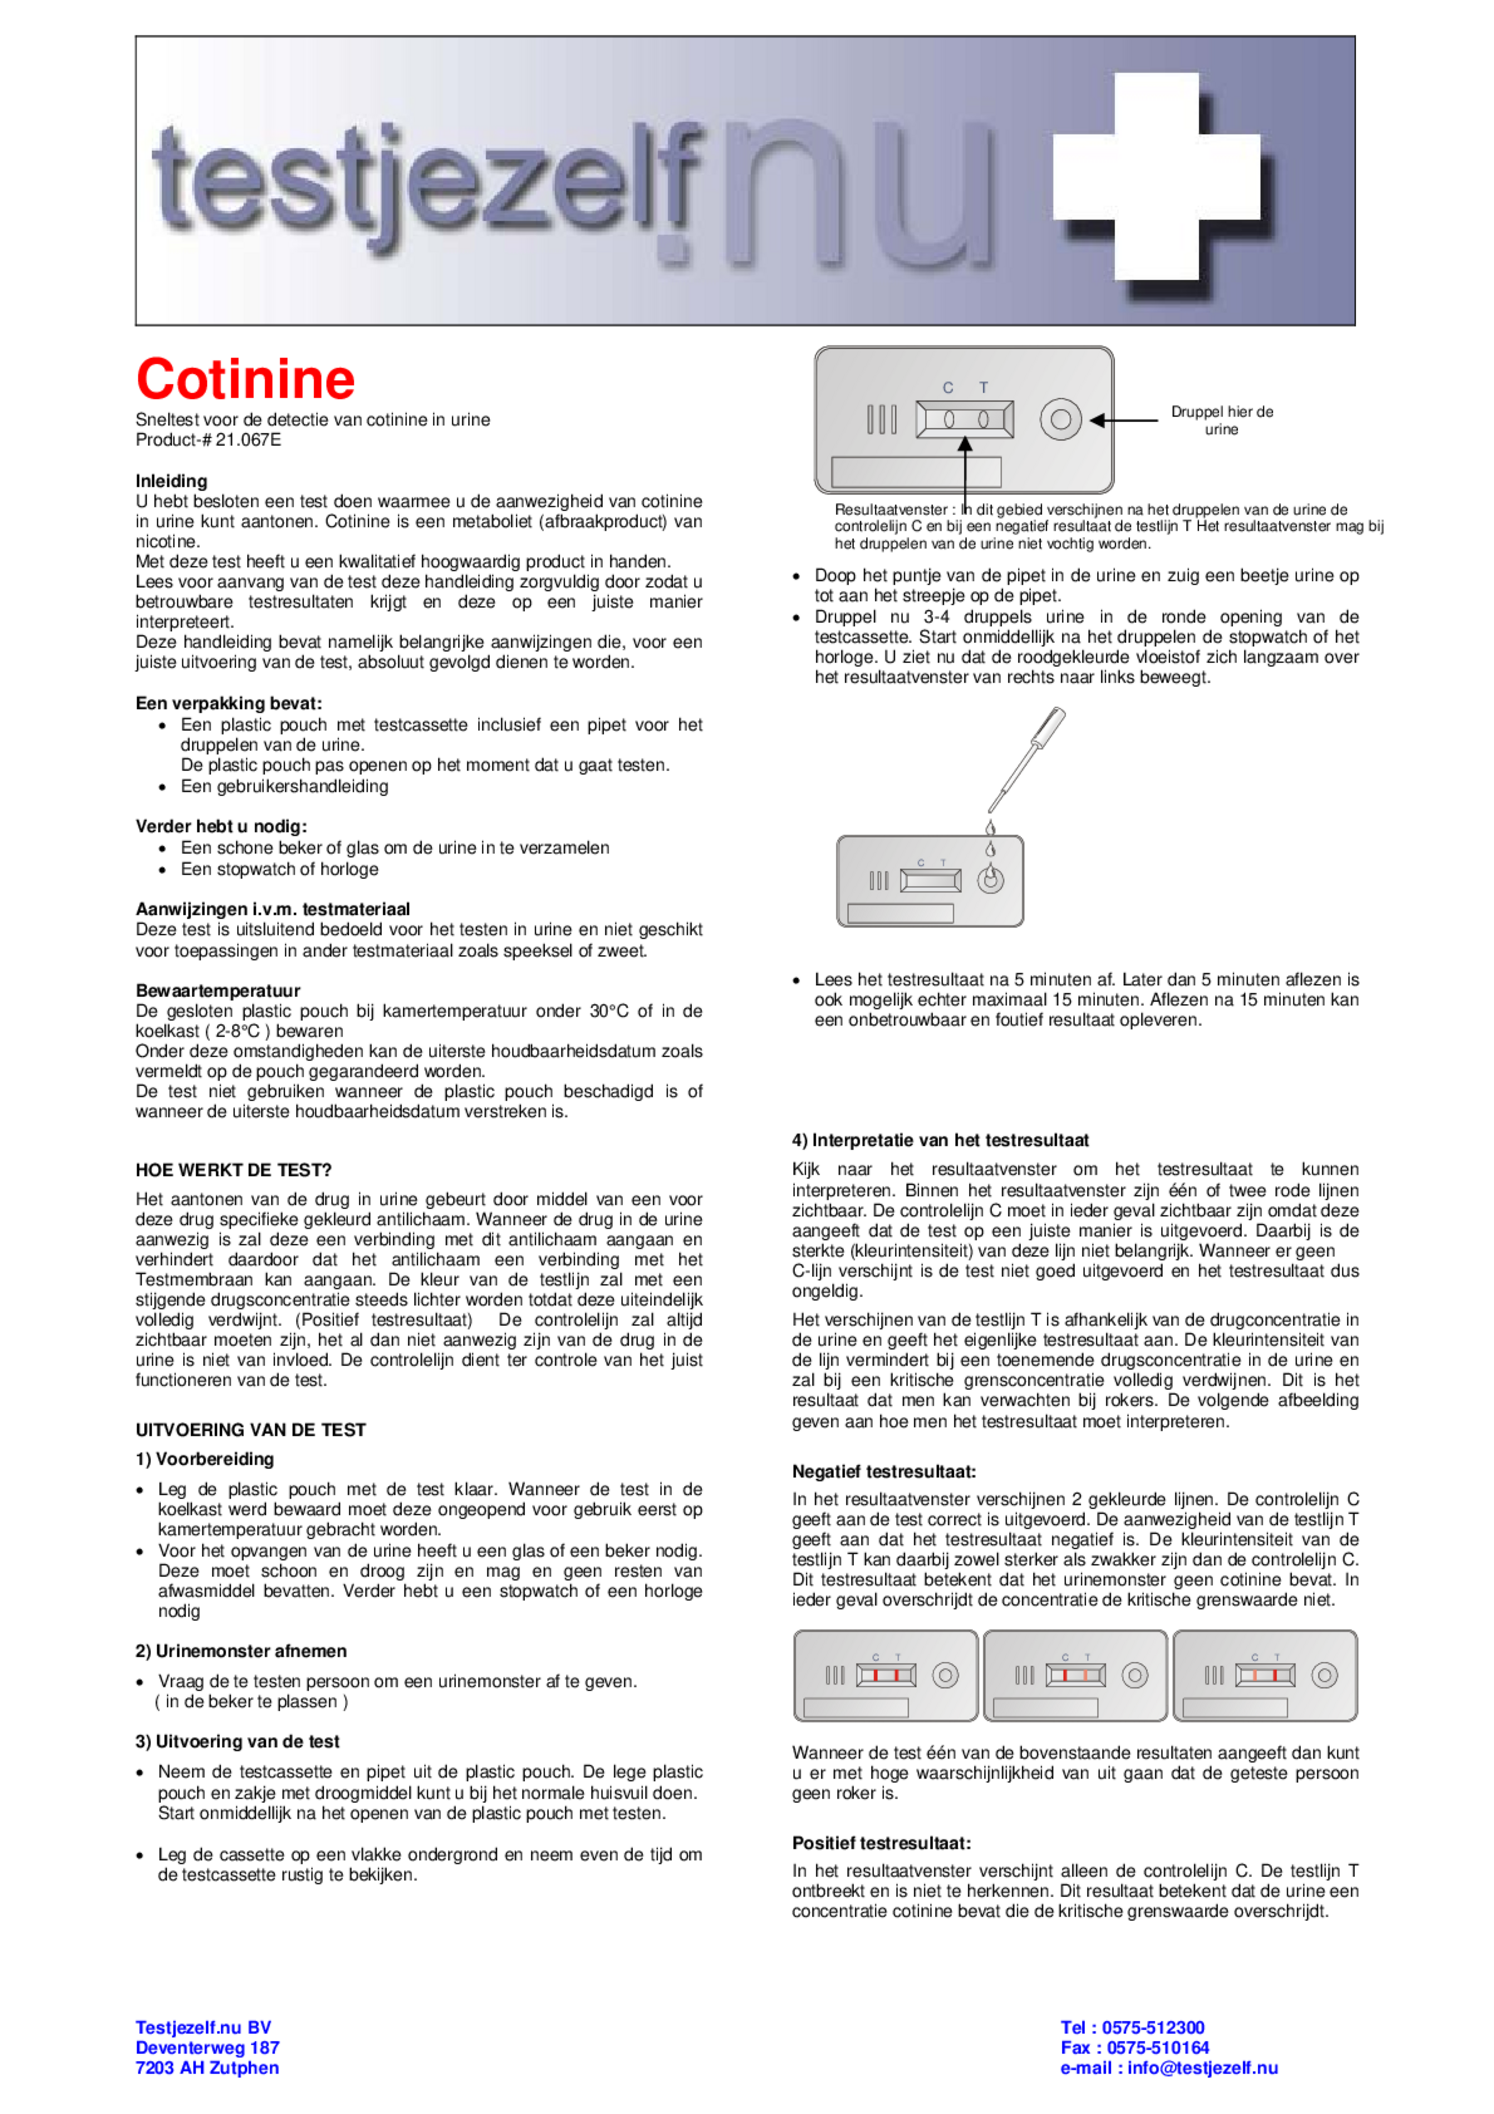 Drugstest Cotinine (Nicotine) afbeelding van document #1, gebruiksaanwijzing